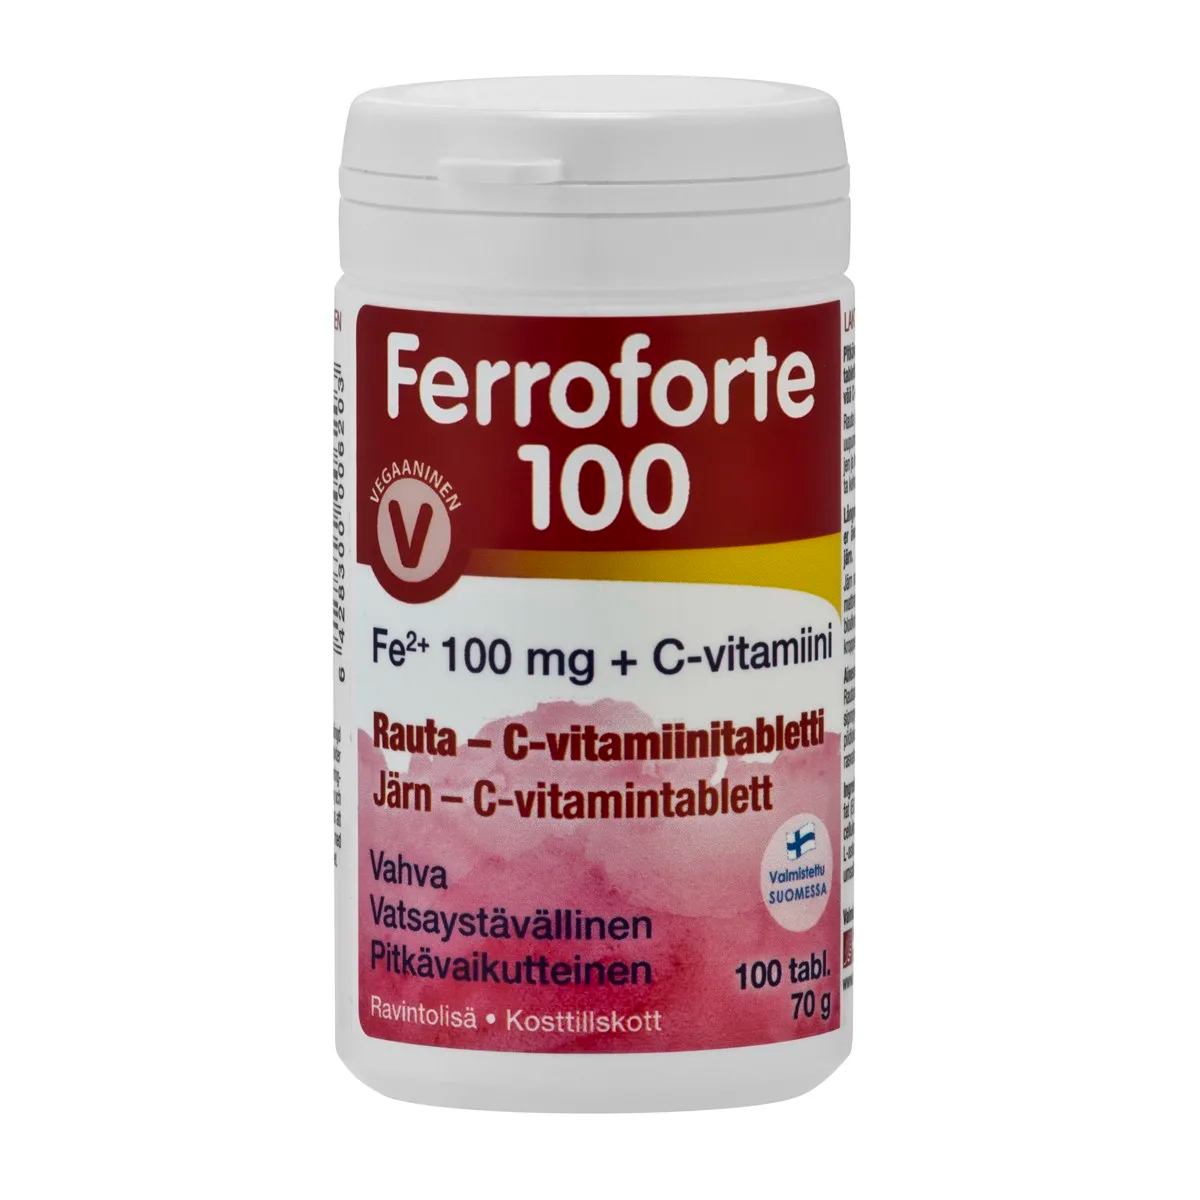 Ferroforte 100 is a strong iron